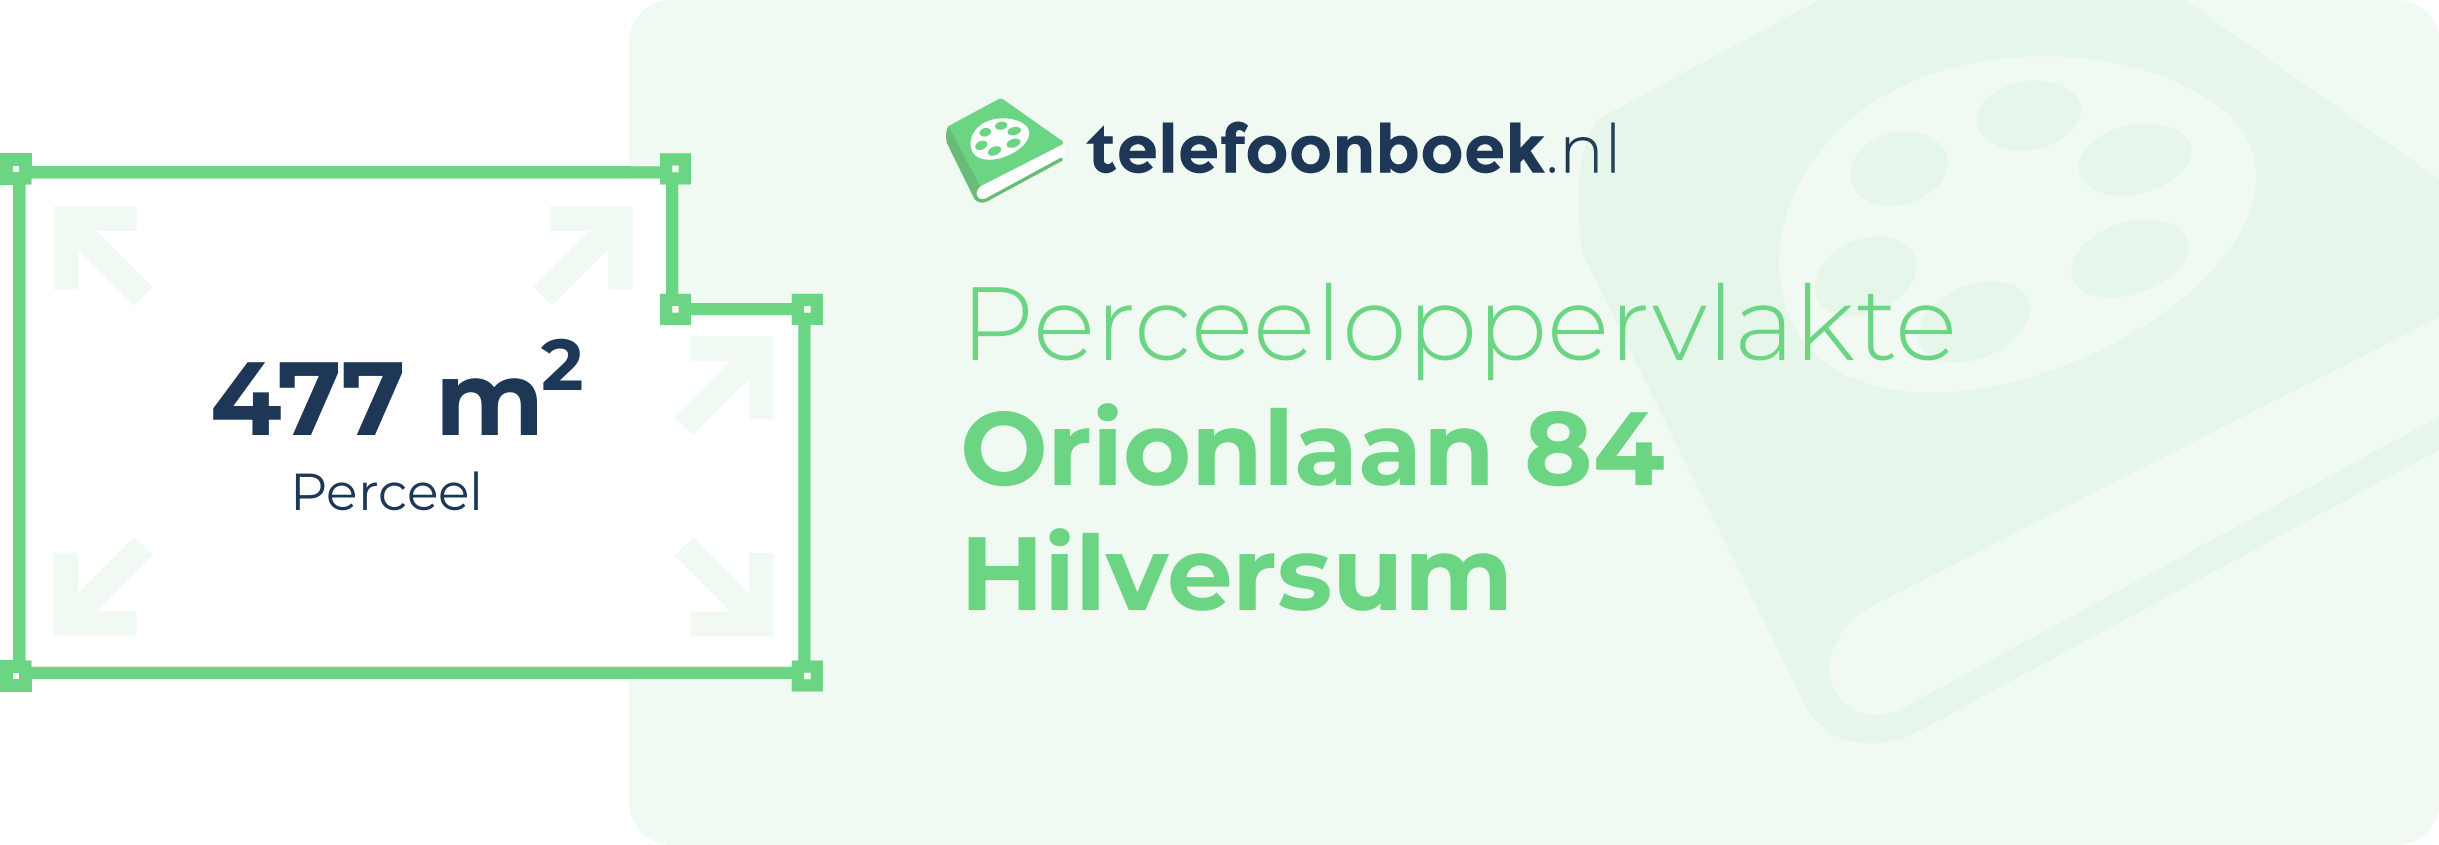 Perceeloppervlakte Orionlaan 84 Hilversum